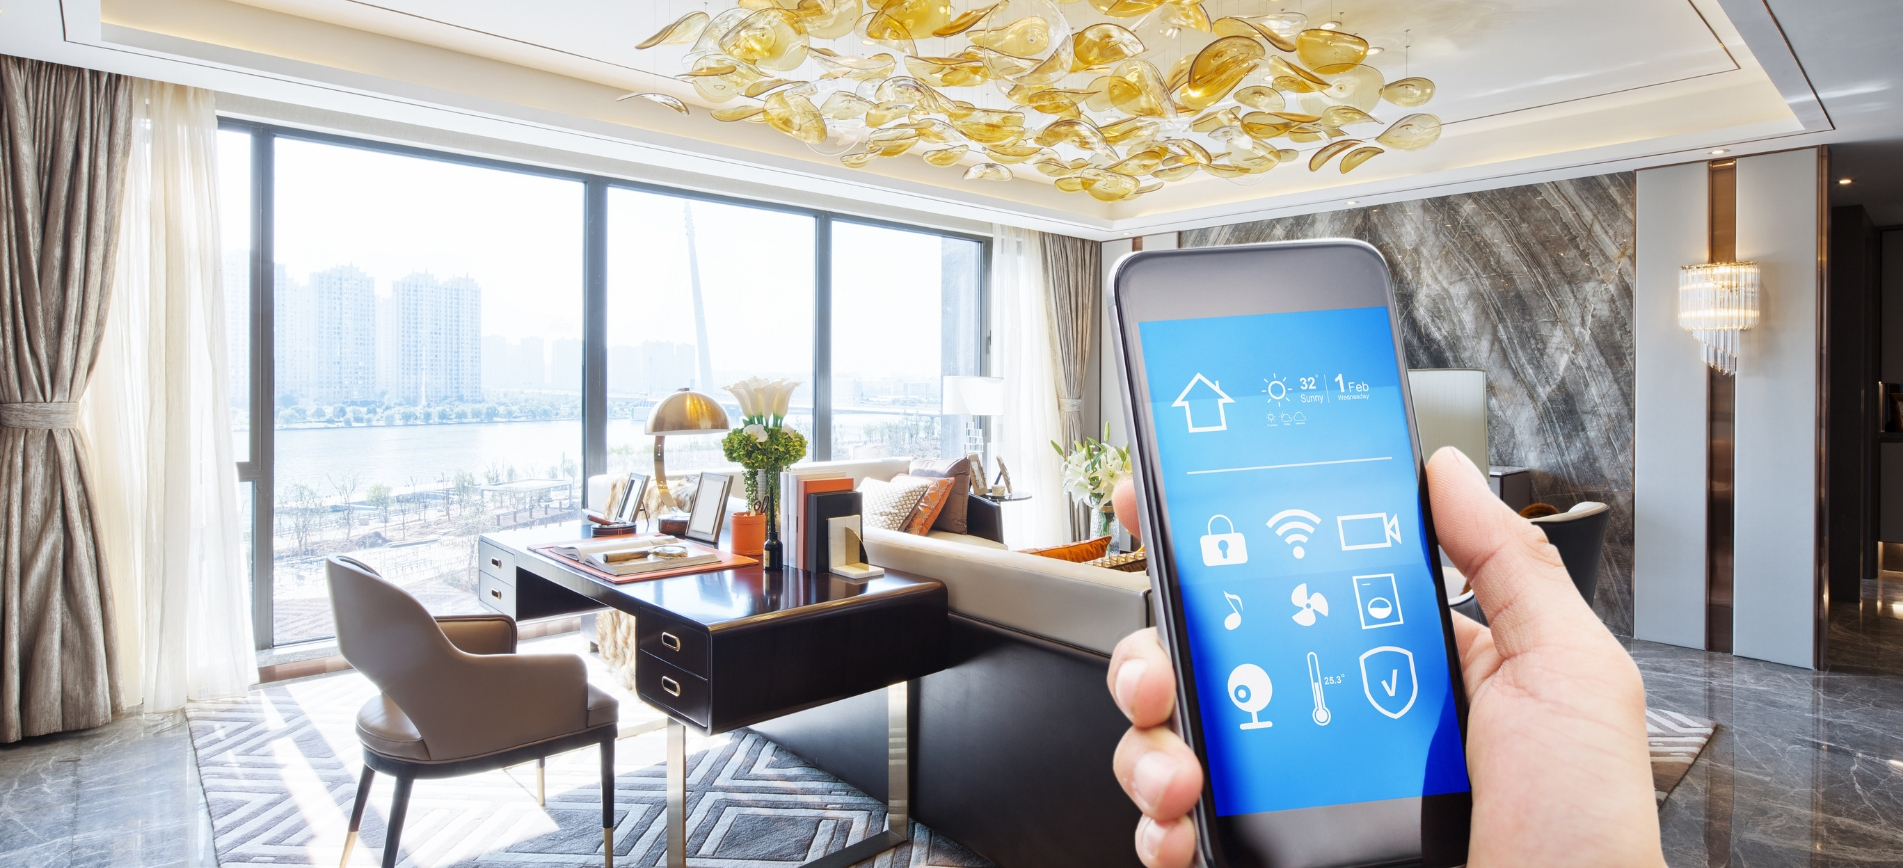 smart apartmnet, smart home, home automation